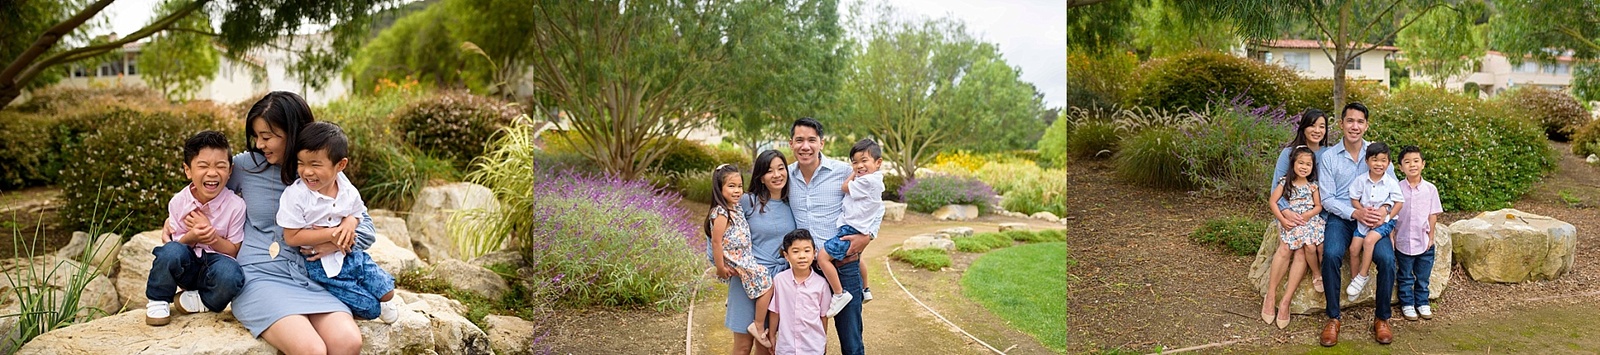 Palos Verdes Estates Family Photos